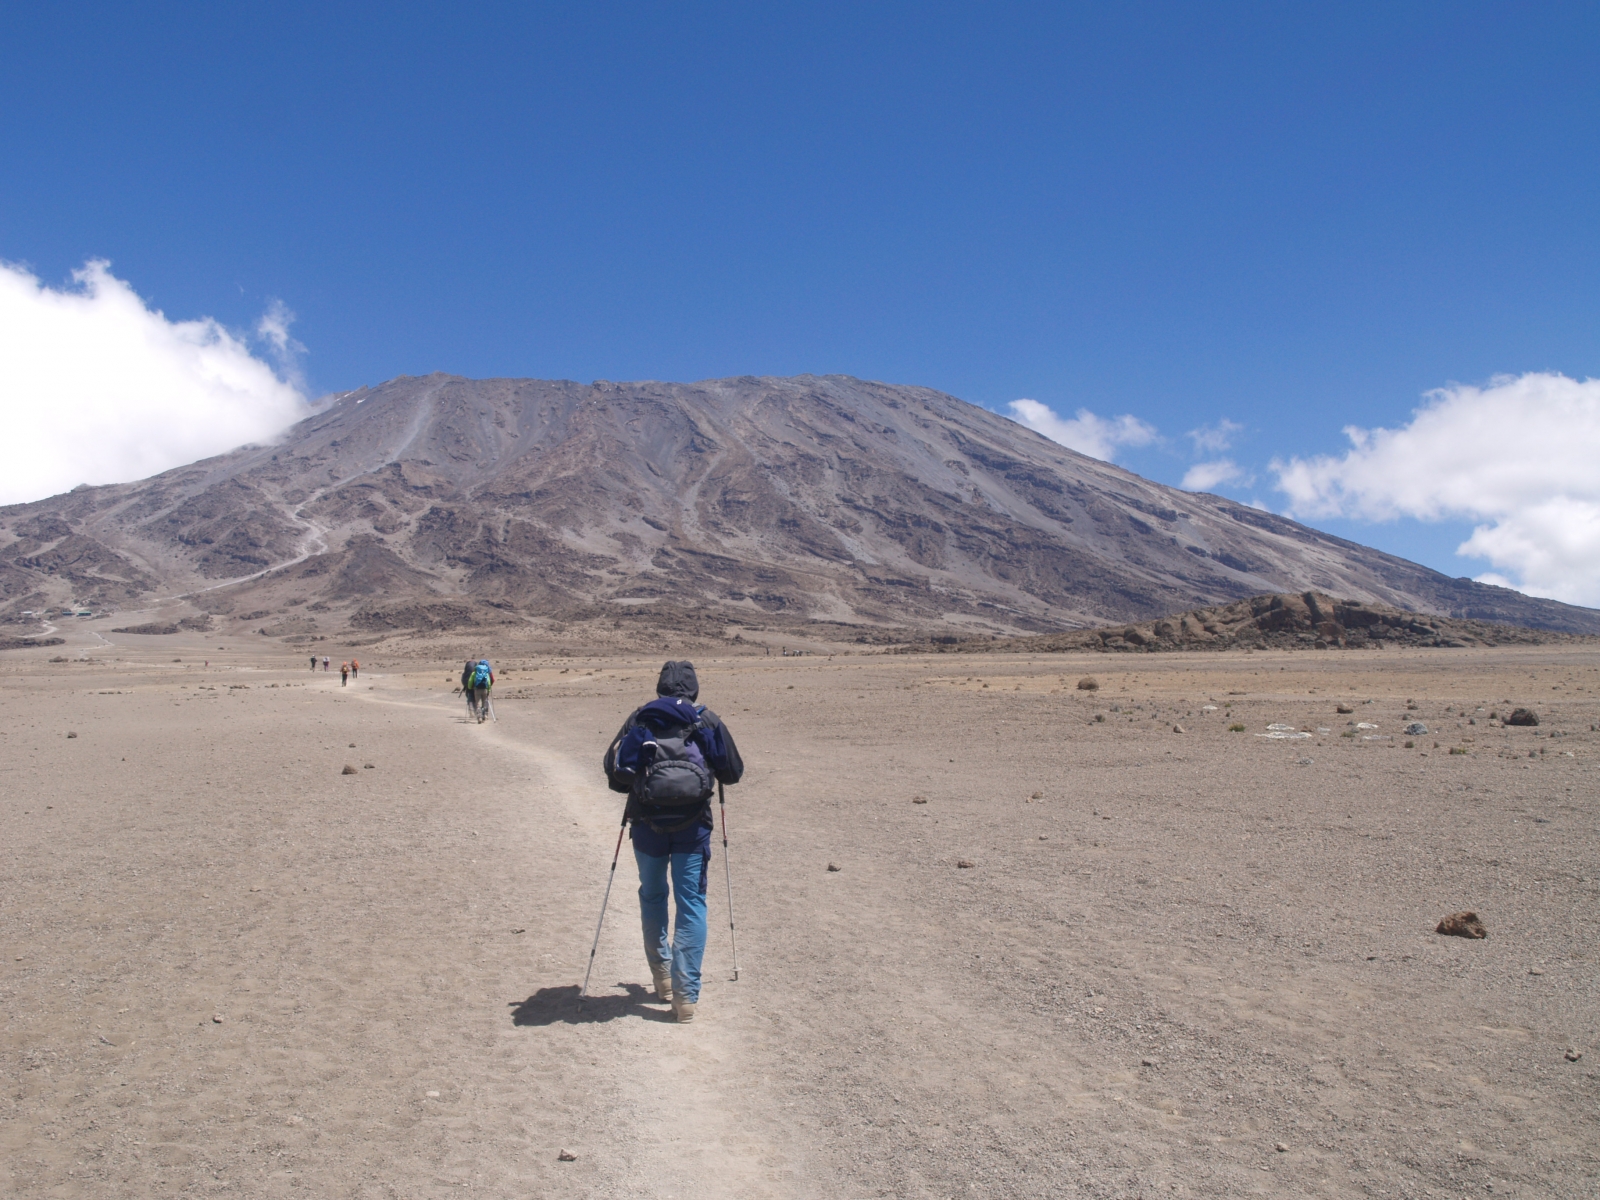 Le Kilimandjaro culmine à 5895 mètres. 